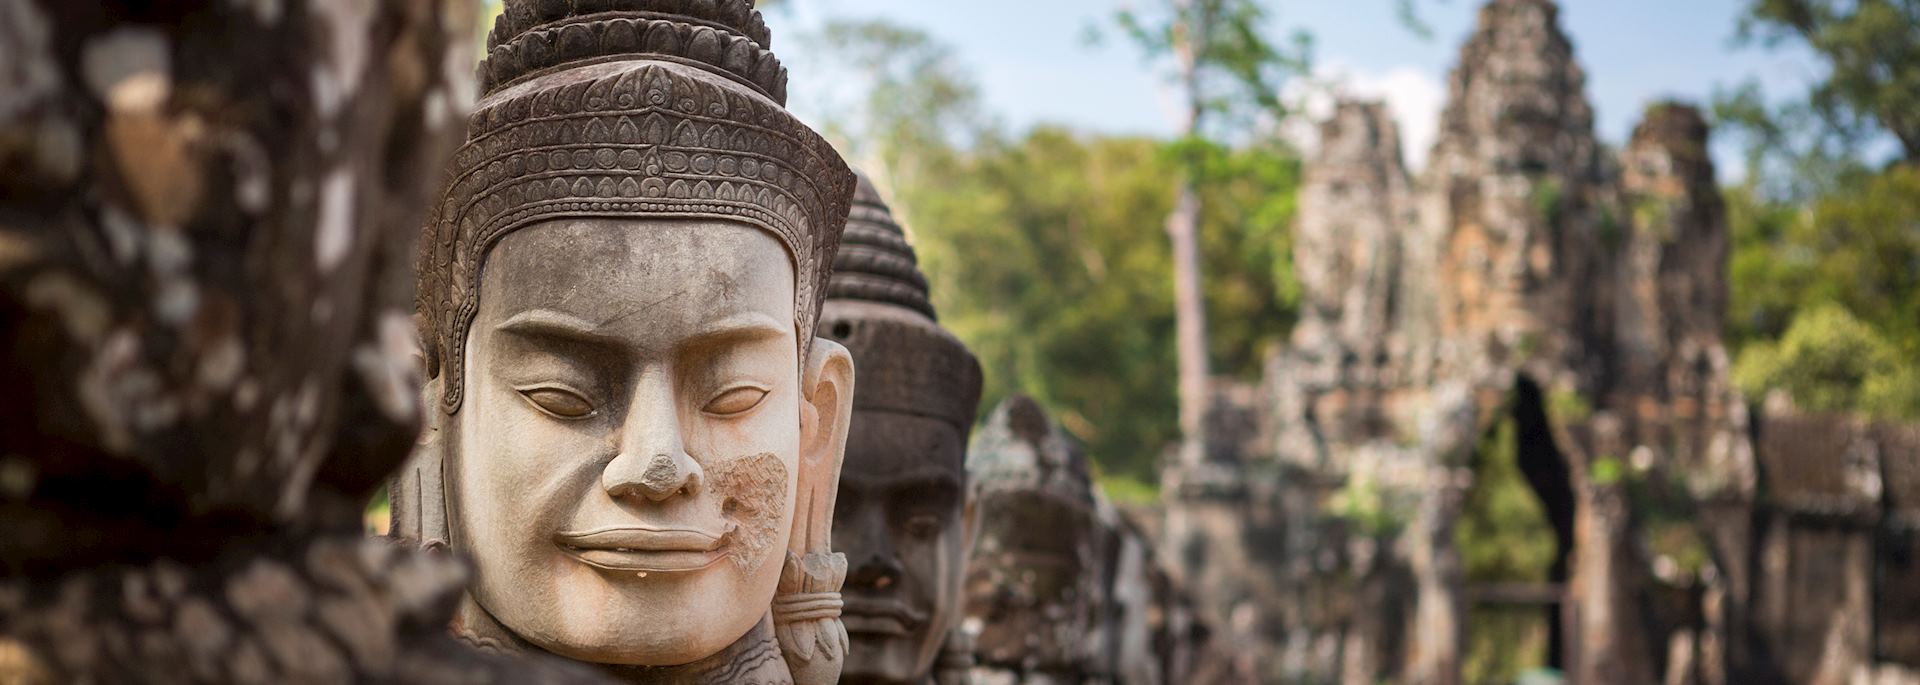 Buddhist head statue, Angkor Wat